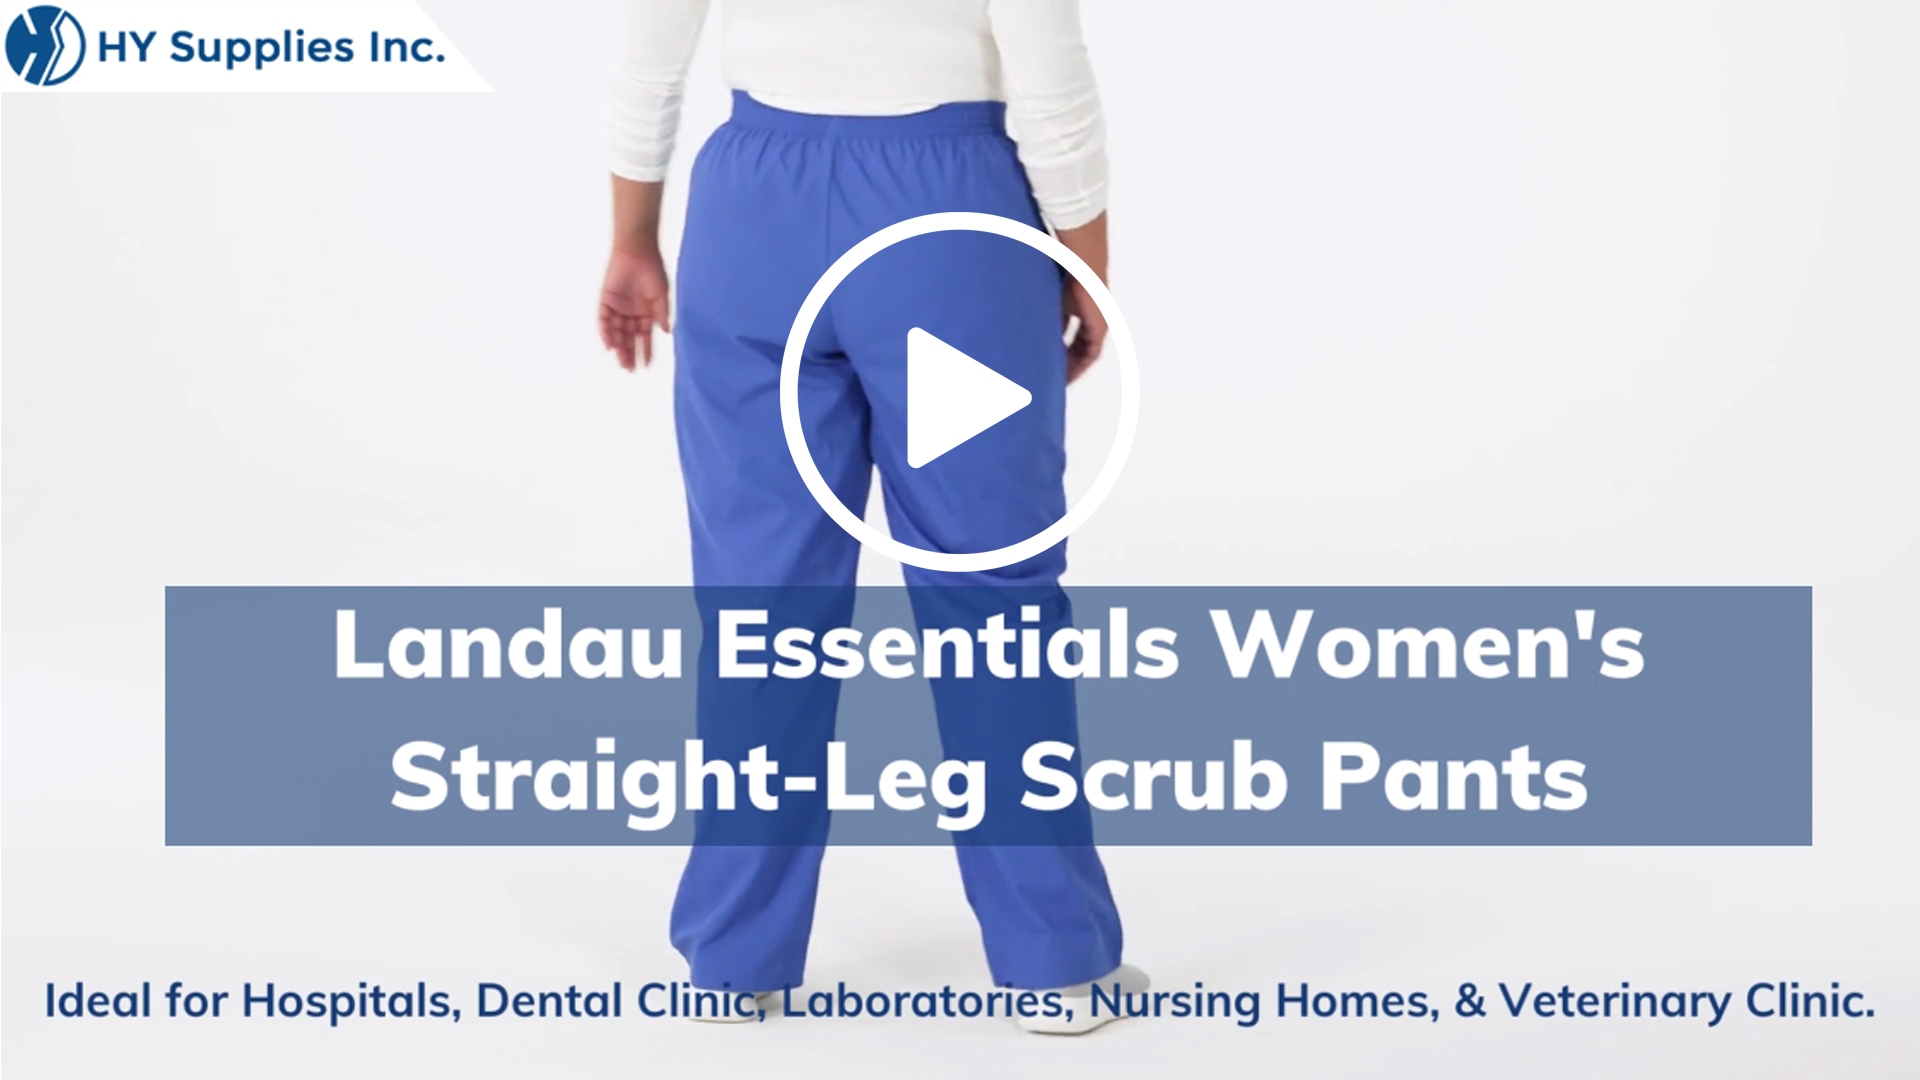 Landau Essentials Women's Straight-Leg Cargo Scrub Pants